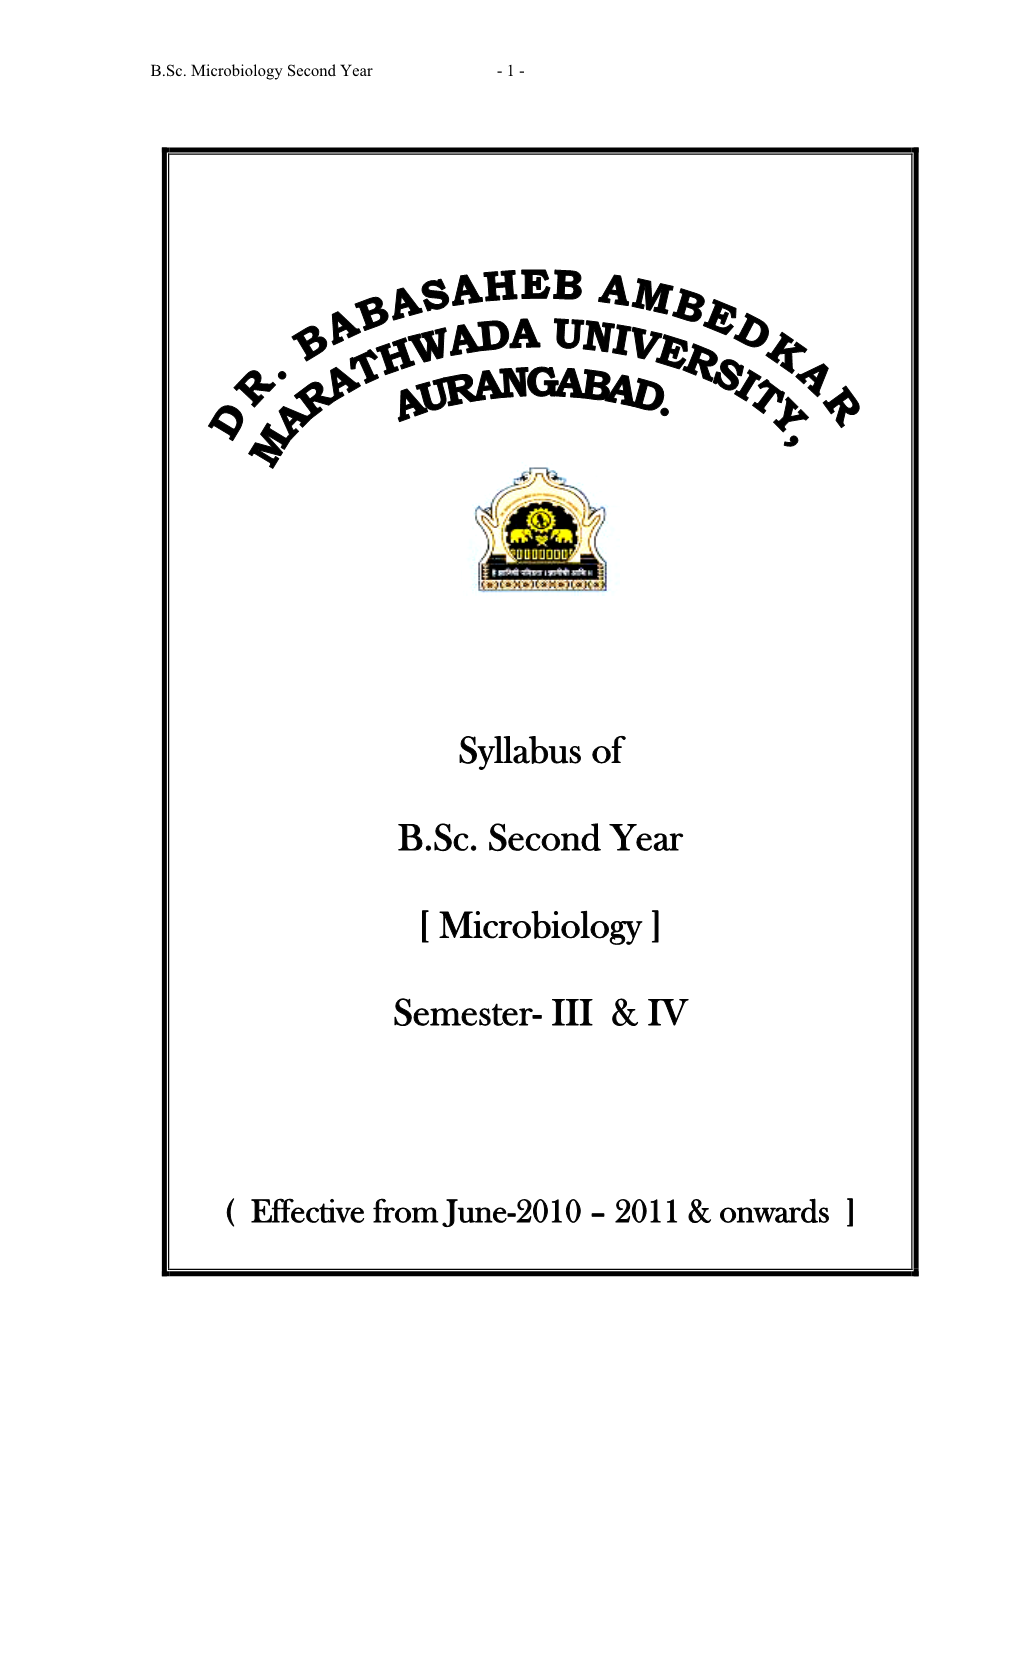 Syllabus of B.Sc. Second Year [ Microbiology ] Semester- III & IV